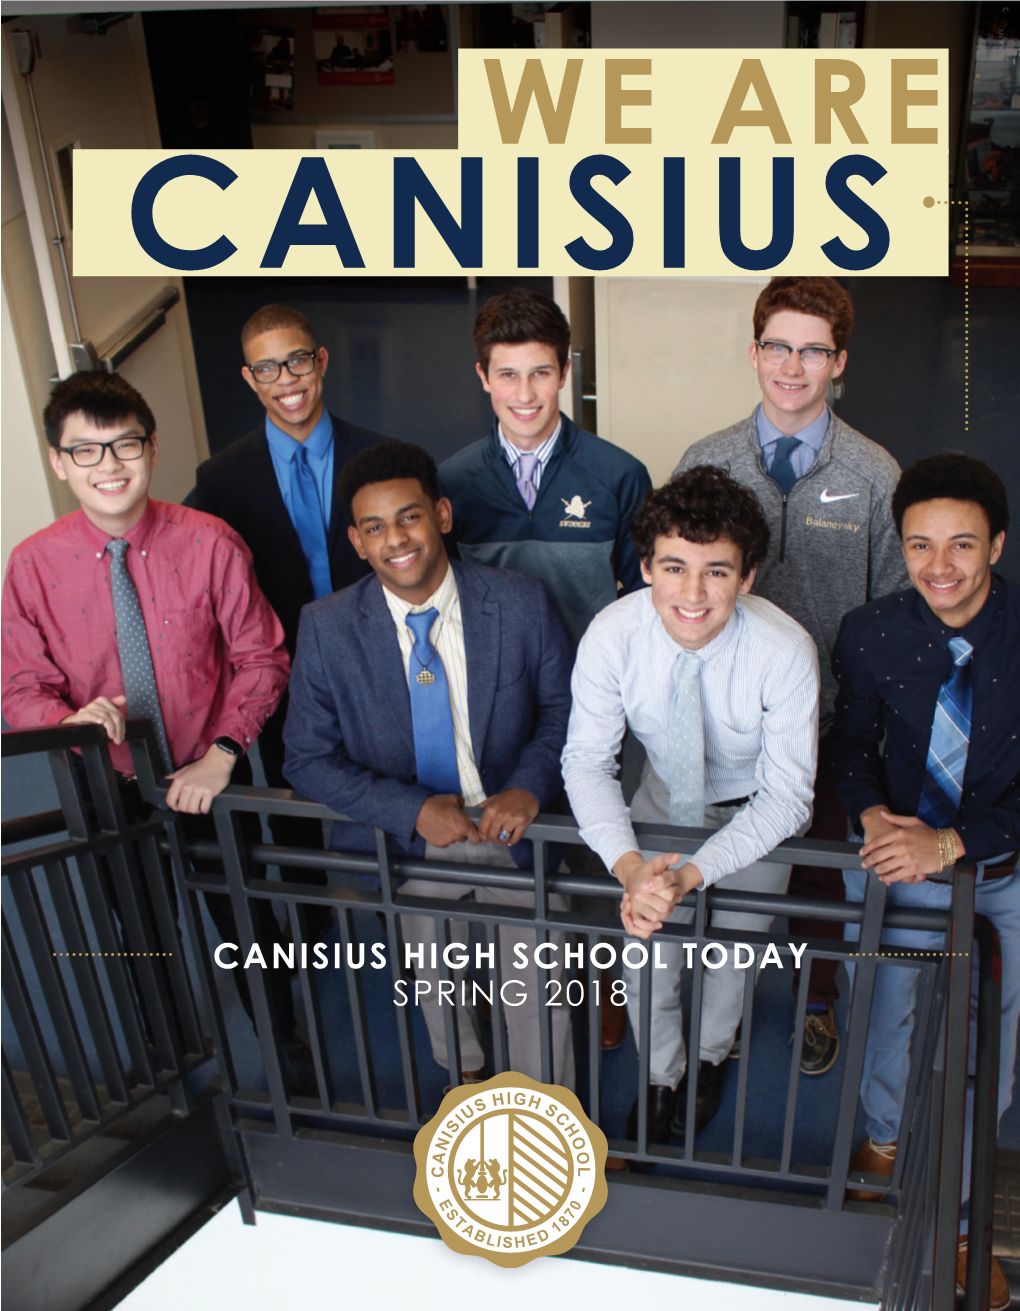 CANISIUS HIGH SCHOOL TODAY SPRING 2018 CANISIUS HIGH SCHOOL 1180 Delaware Avenue • Buffalo, NY 14209 • 716.882.0466 •